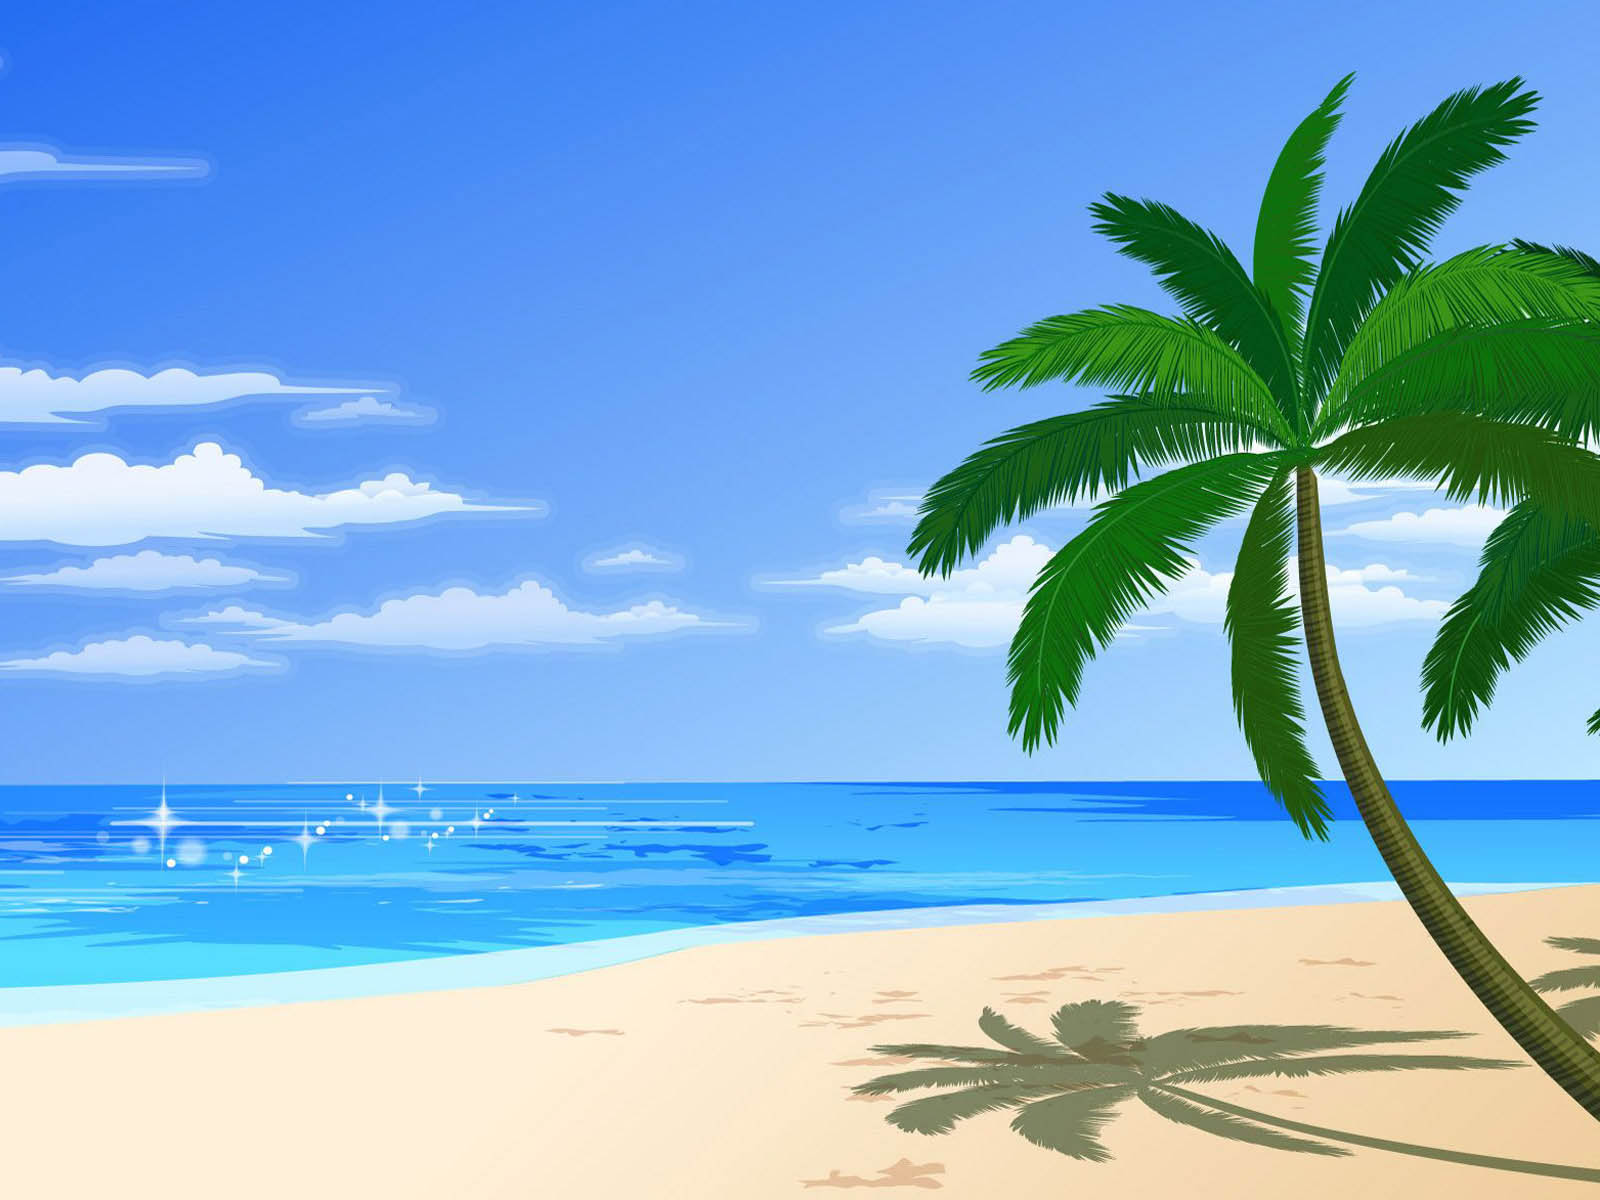 free-beach-scene-cliparts-download-free-beach-scene-cliparts-png